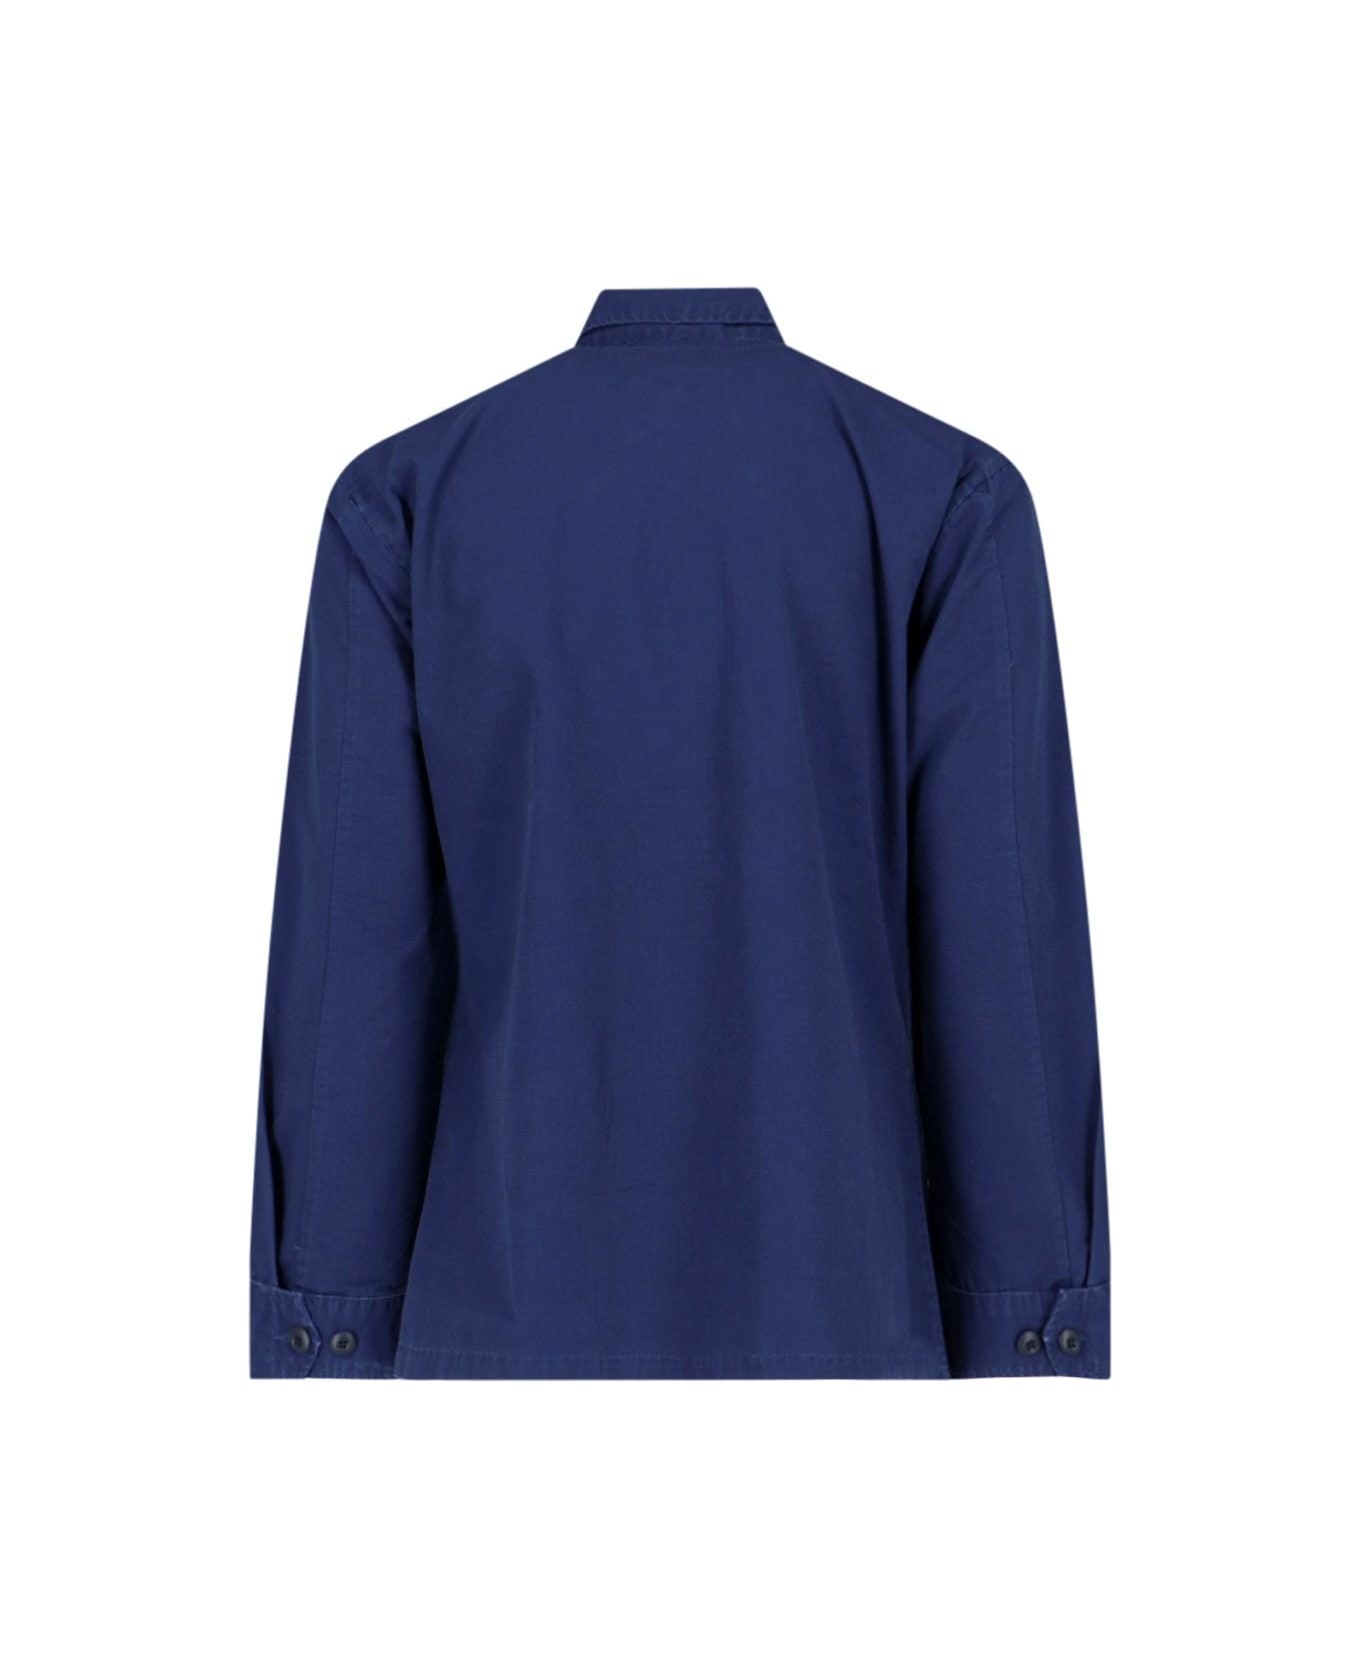 Polo Ralph Lauren Shirt Jacket - Newport Navy シャツ